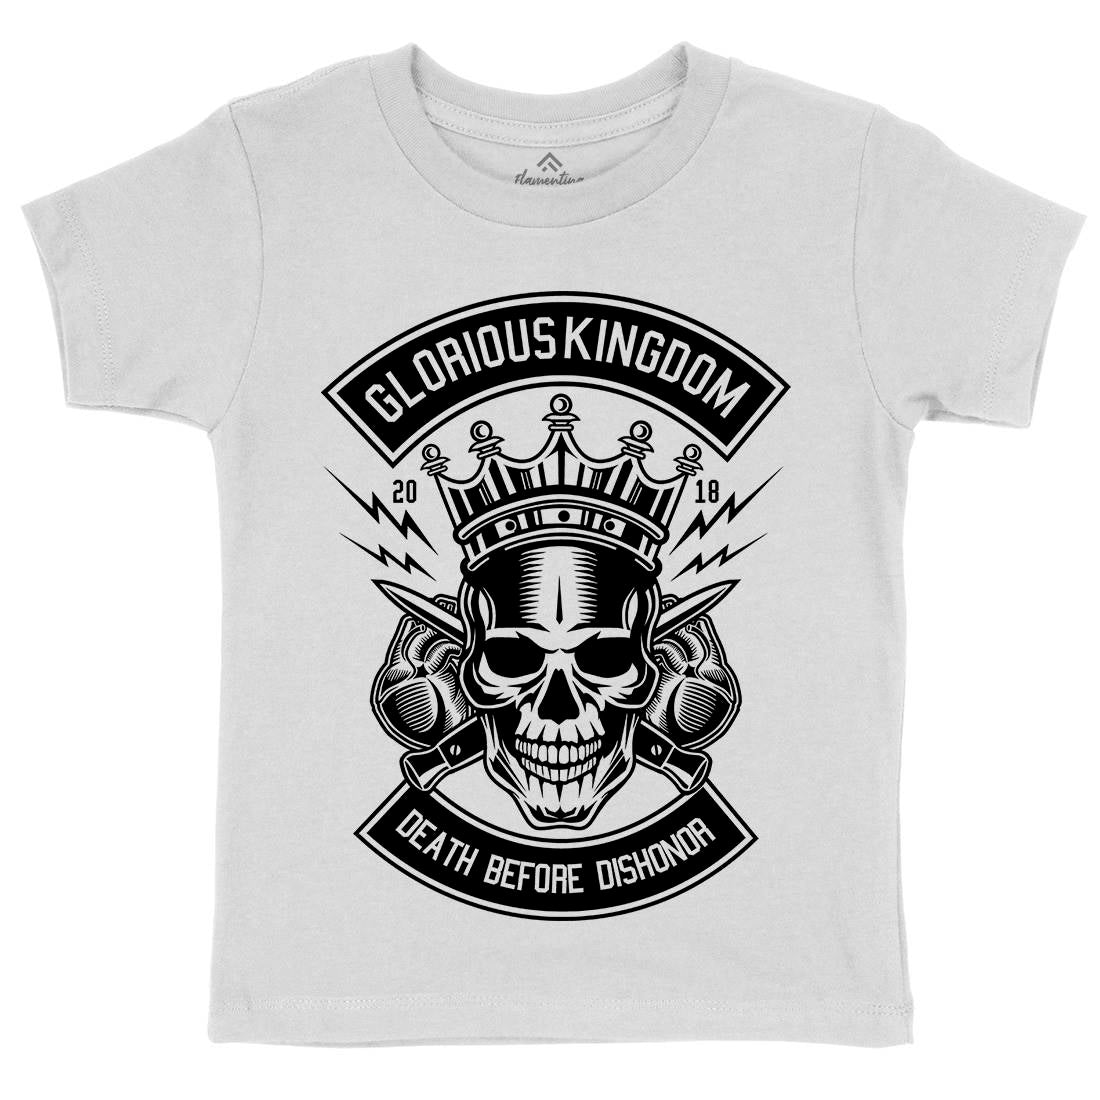 Glorious Kingdom Kids Crew Neck T-Shirt Retro B546